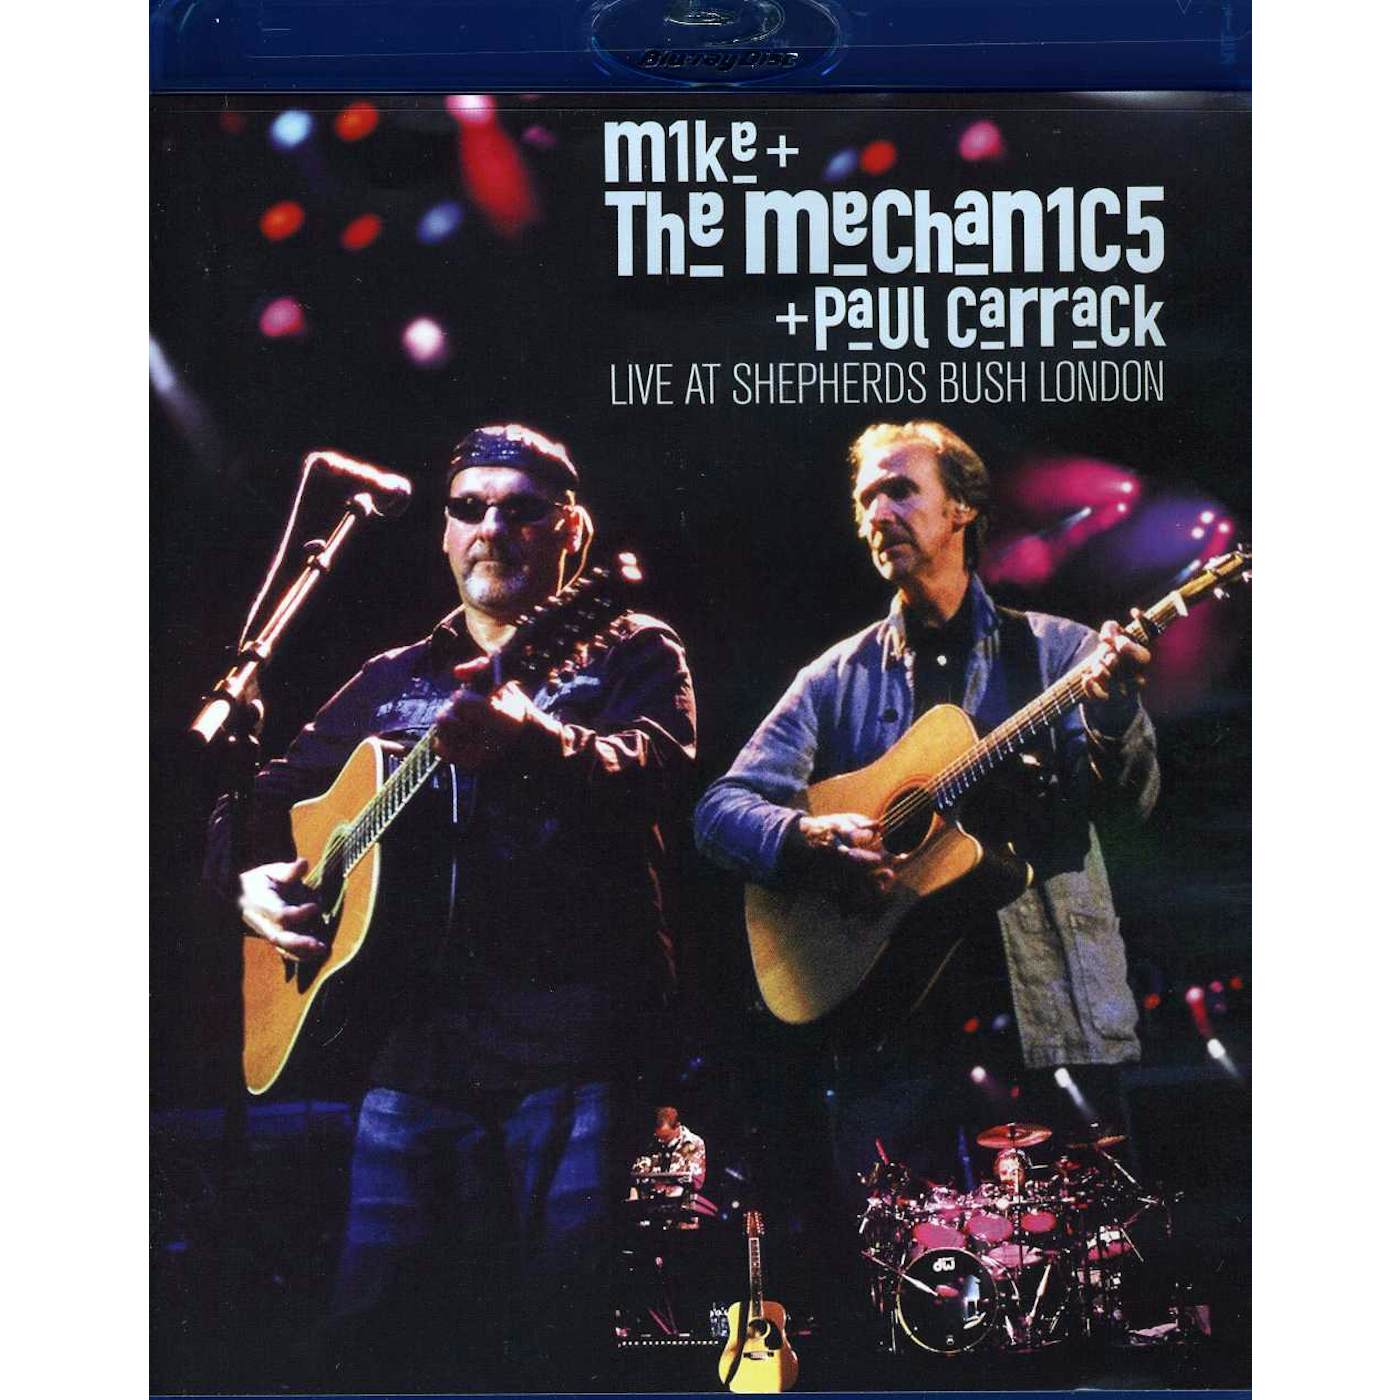 Mike + The Mechanics LIVE AT SHEPHARDS BUSH Blu-ray